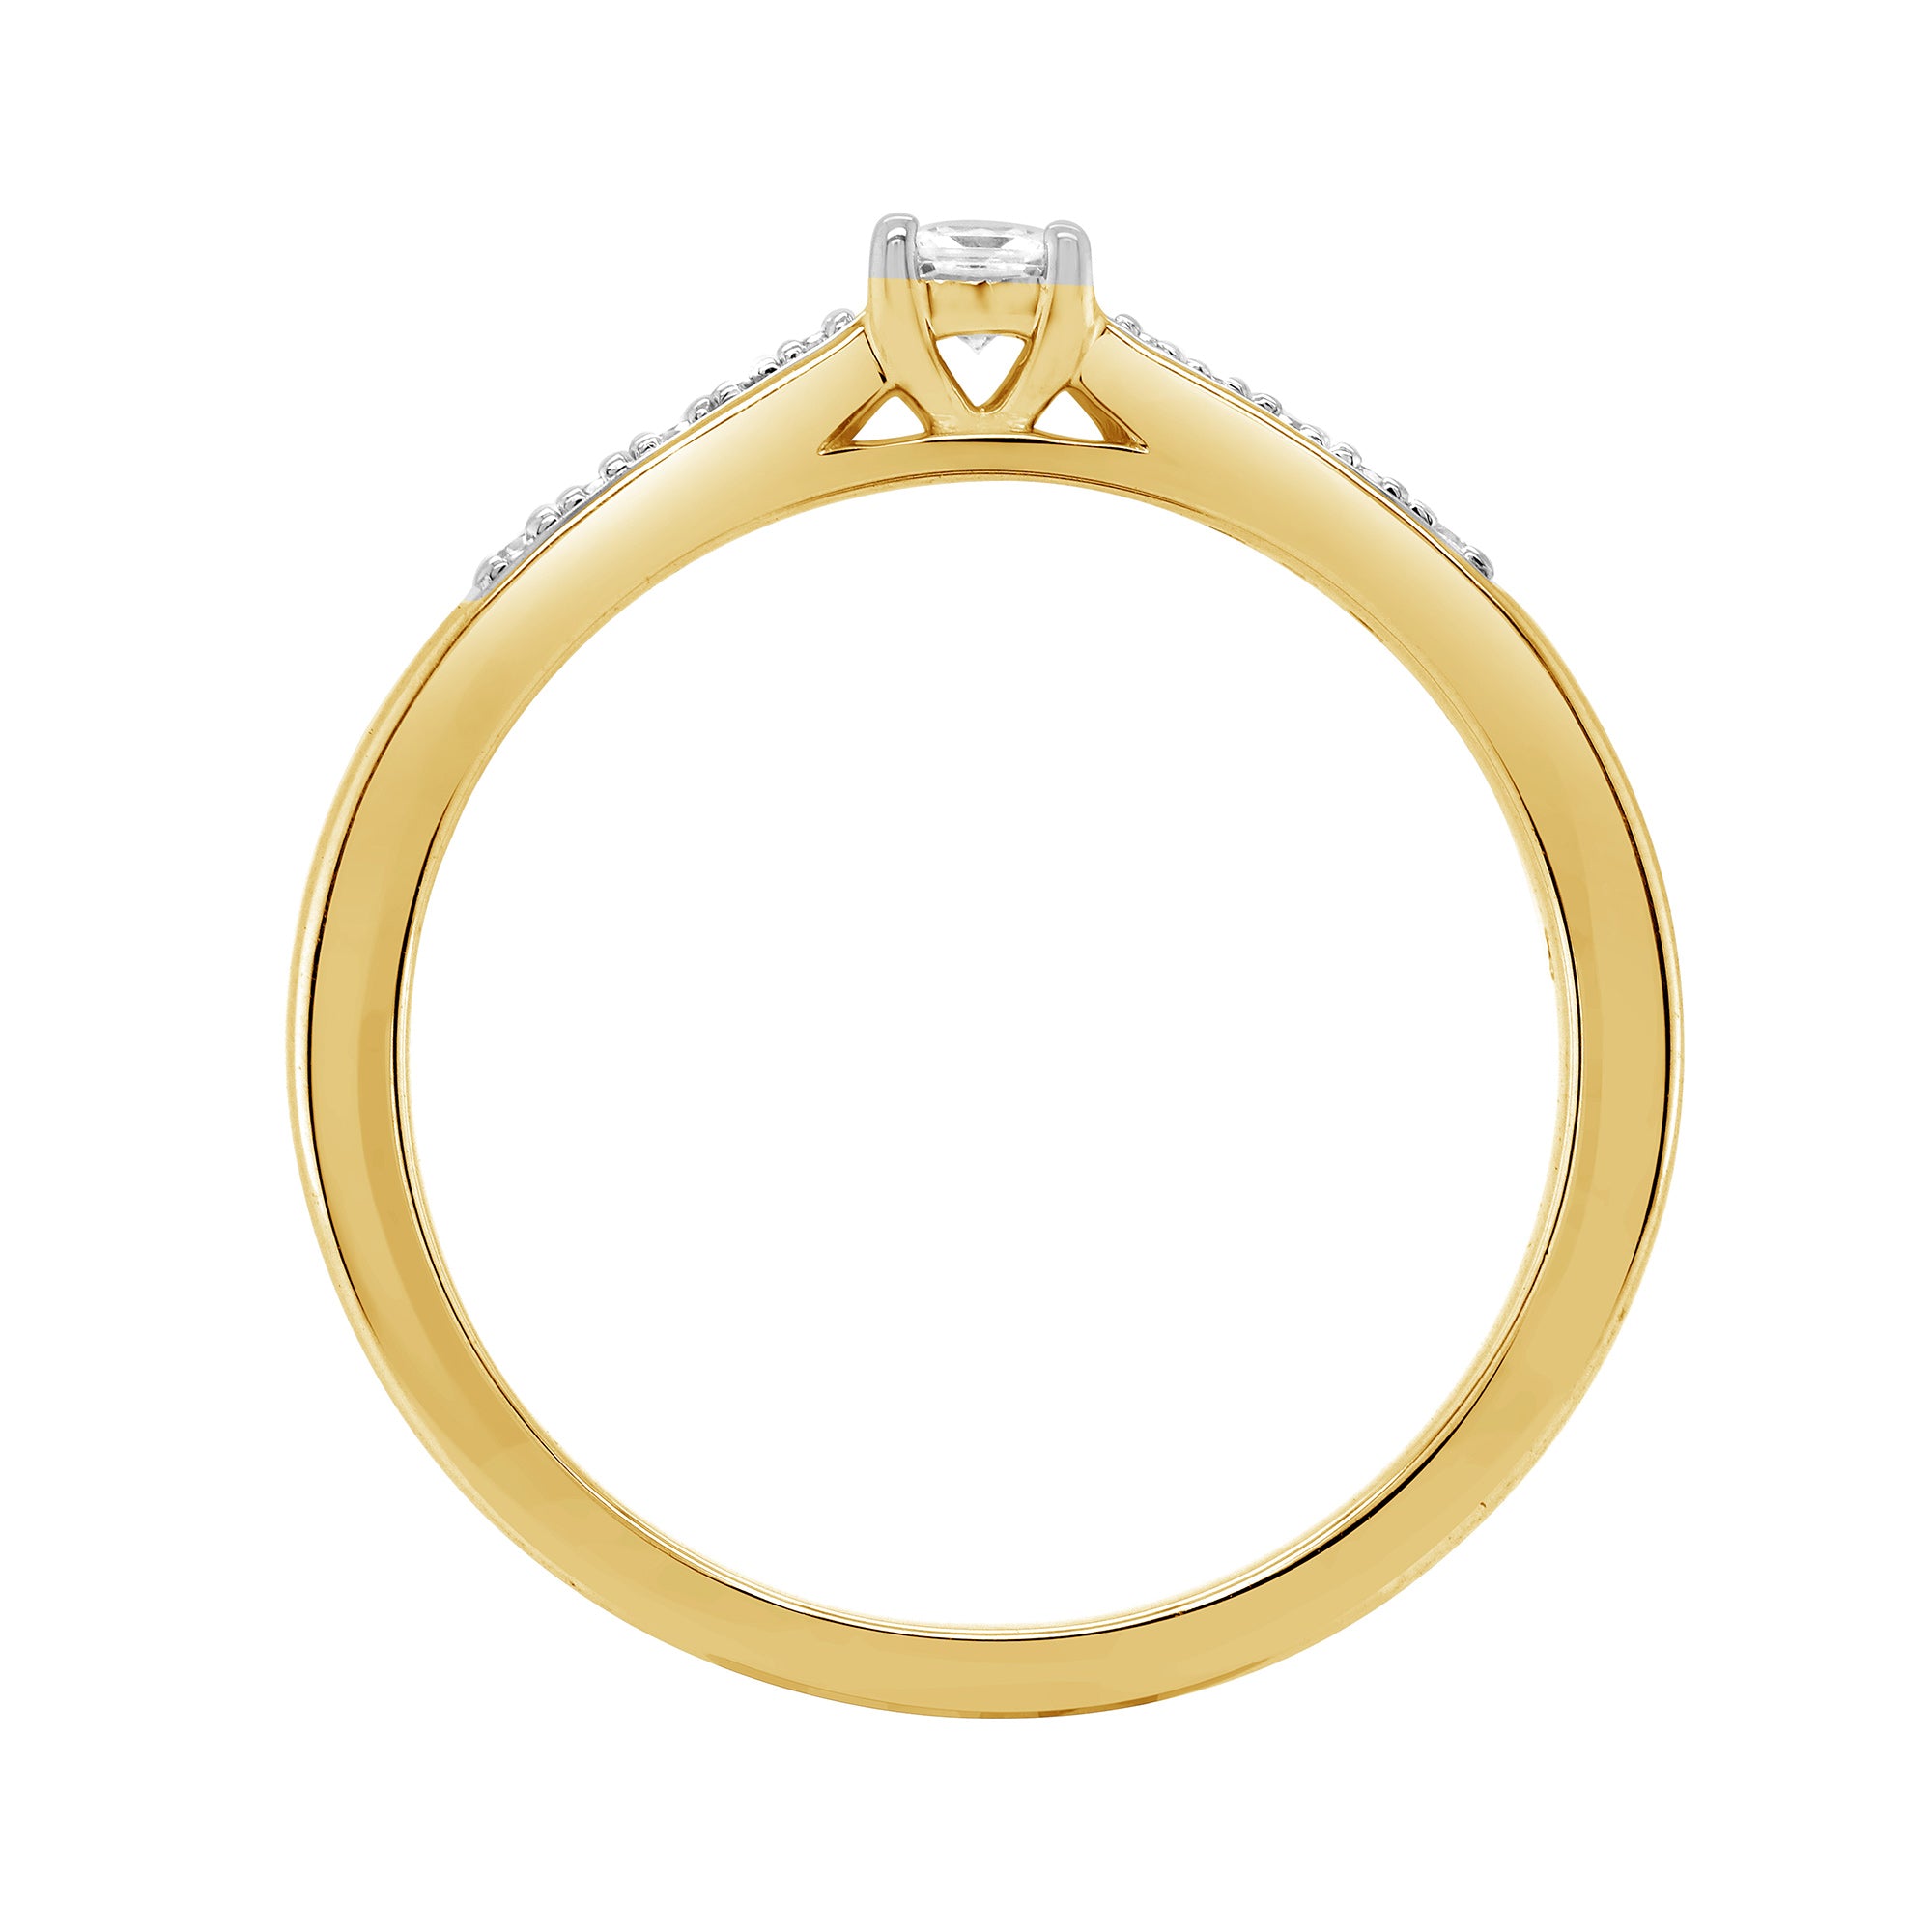 9ct gold princess cut single stone diamond ring with diamond set shoulders 0.16ct